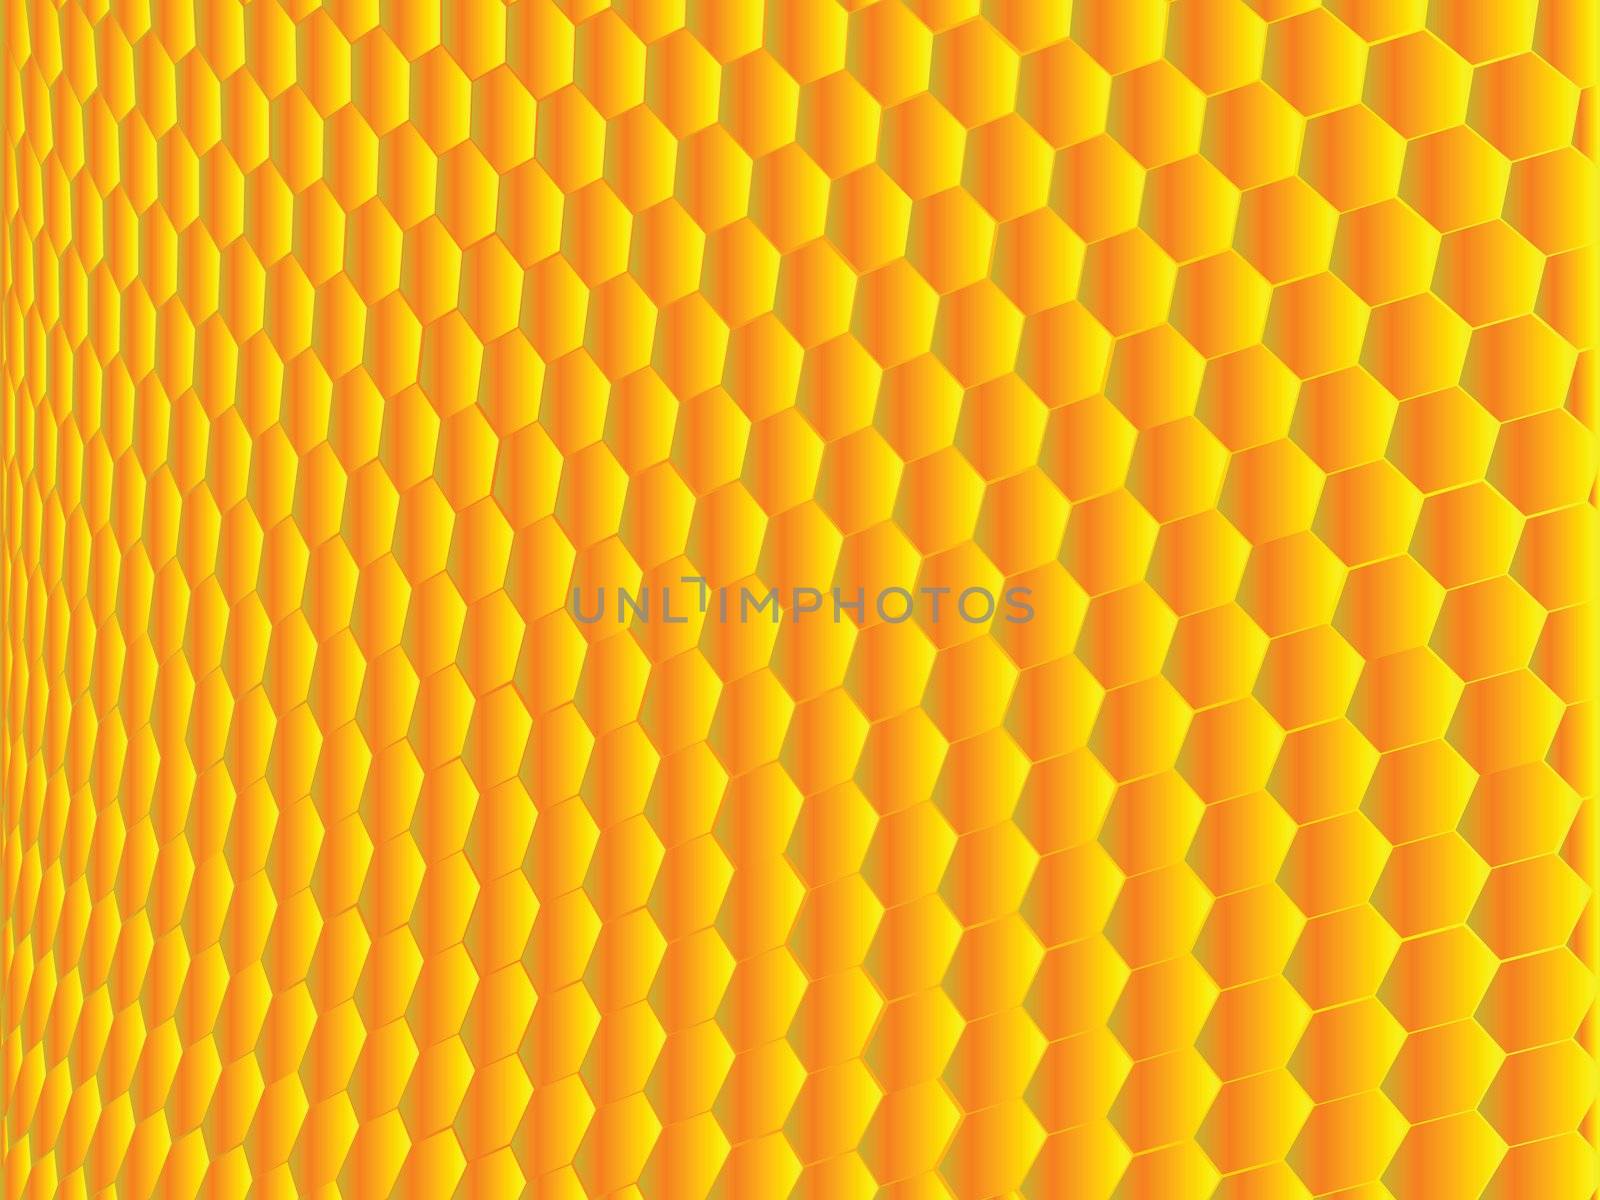 honeycomb by Lirch